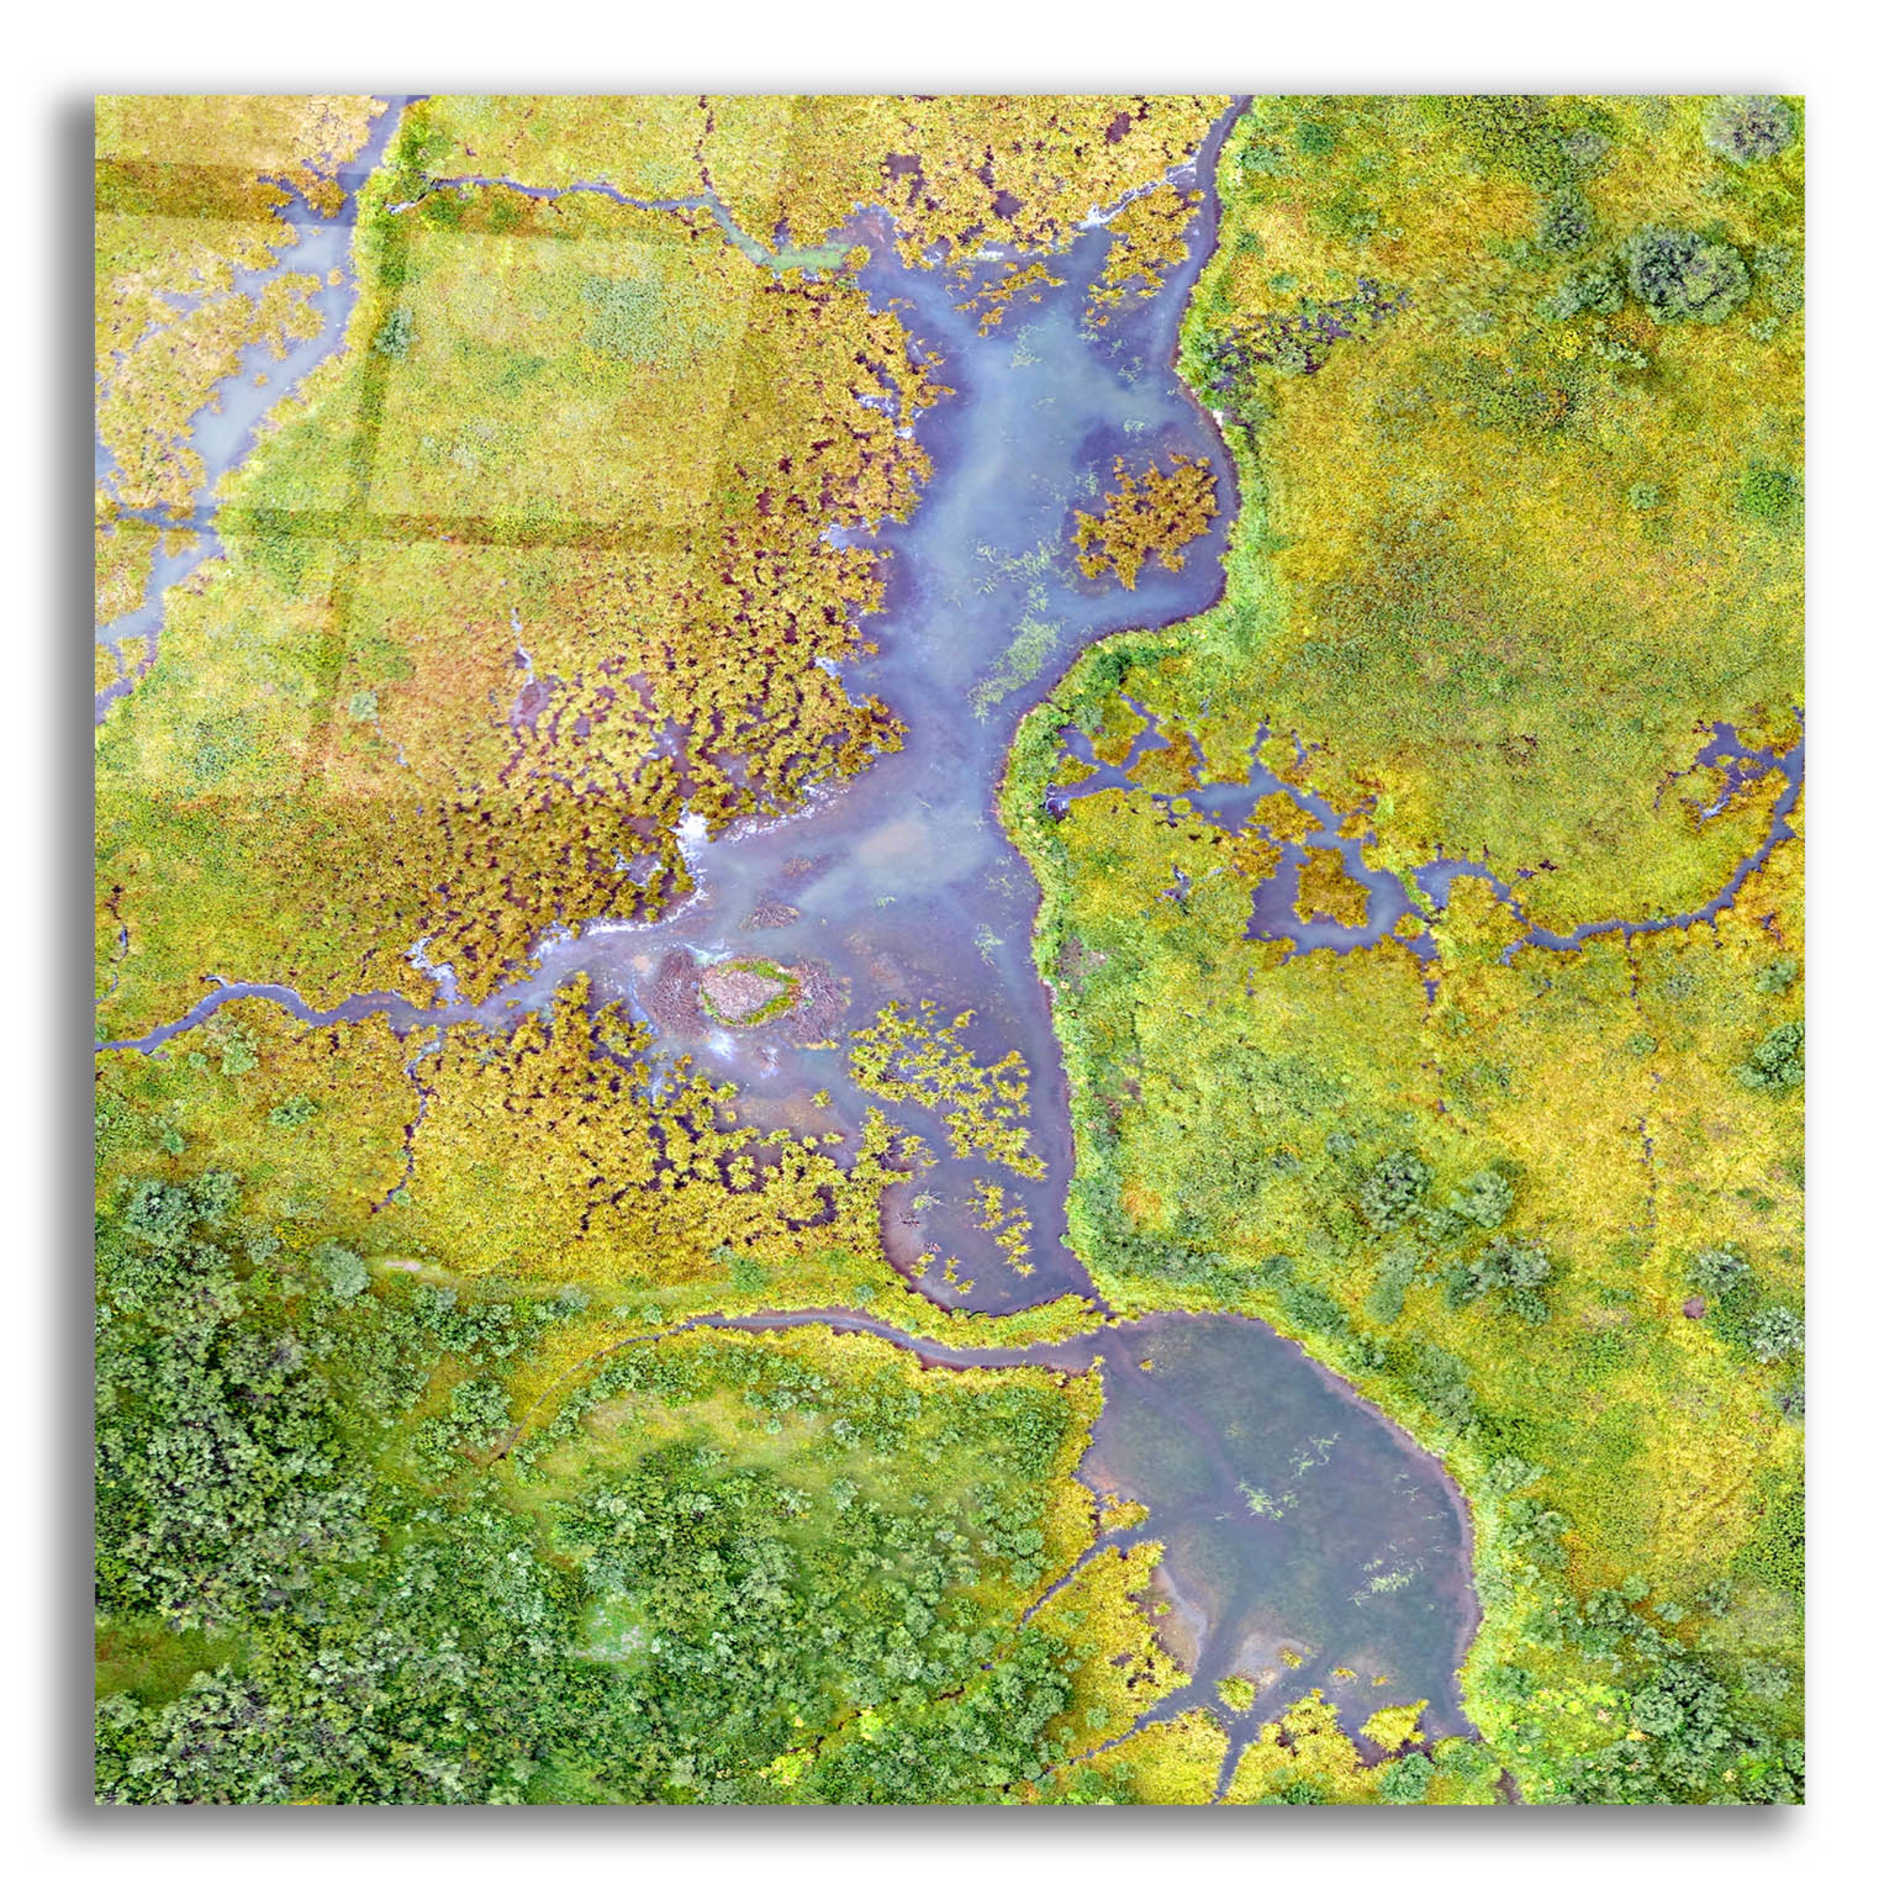 Epic Art 'Earth as Art: Watching Wetlands,' Acrylic Glass Wall Art,12x12x1.1x0,18x18x1.1x0,26x26x1.74x0,37x37x1.74x0